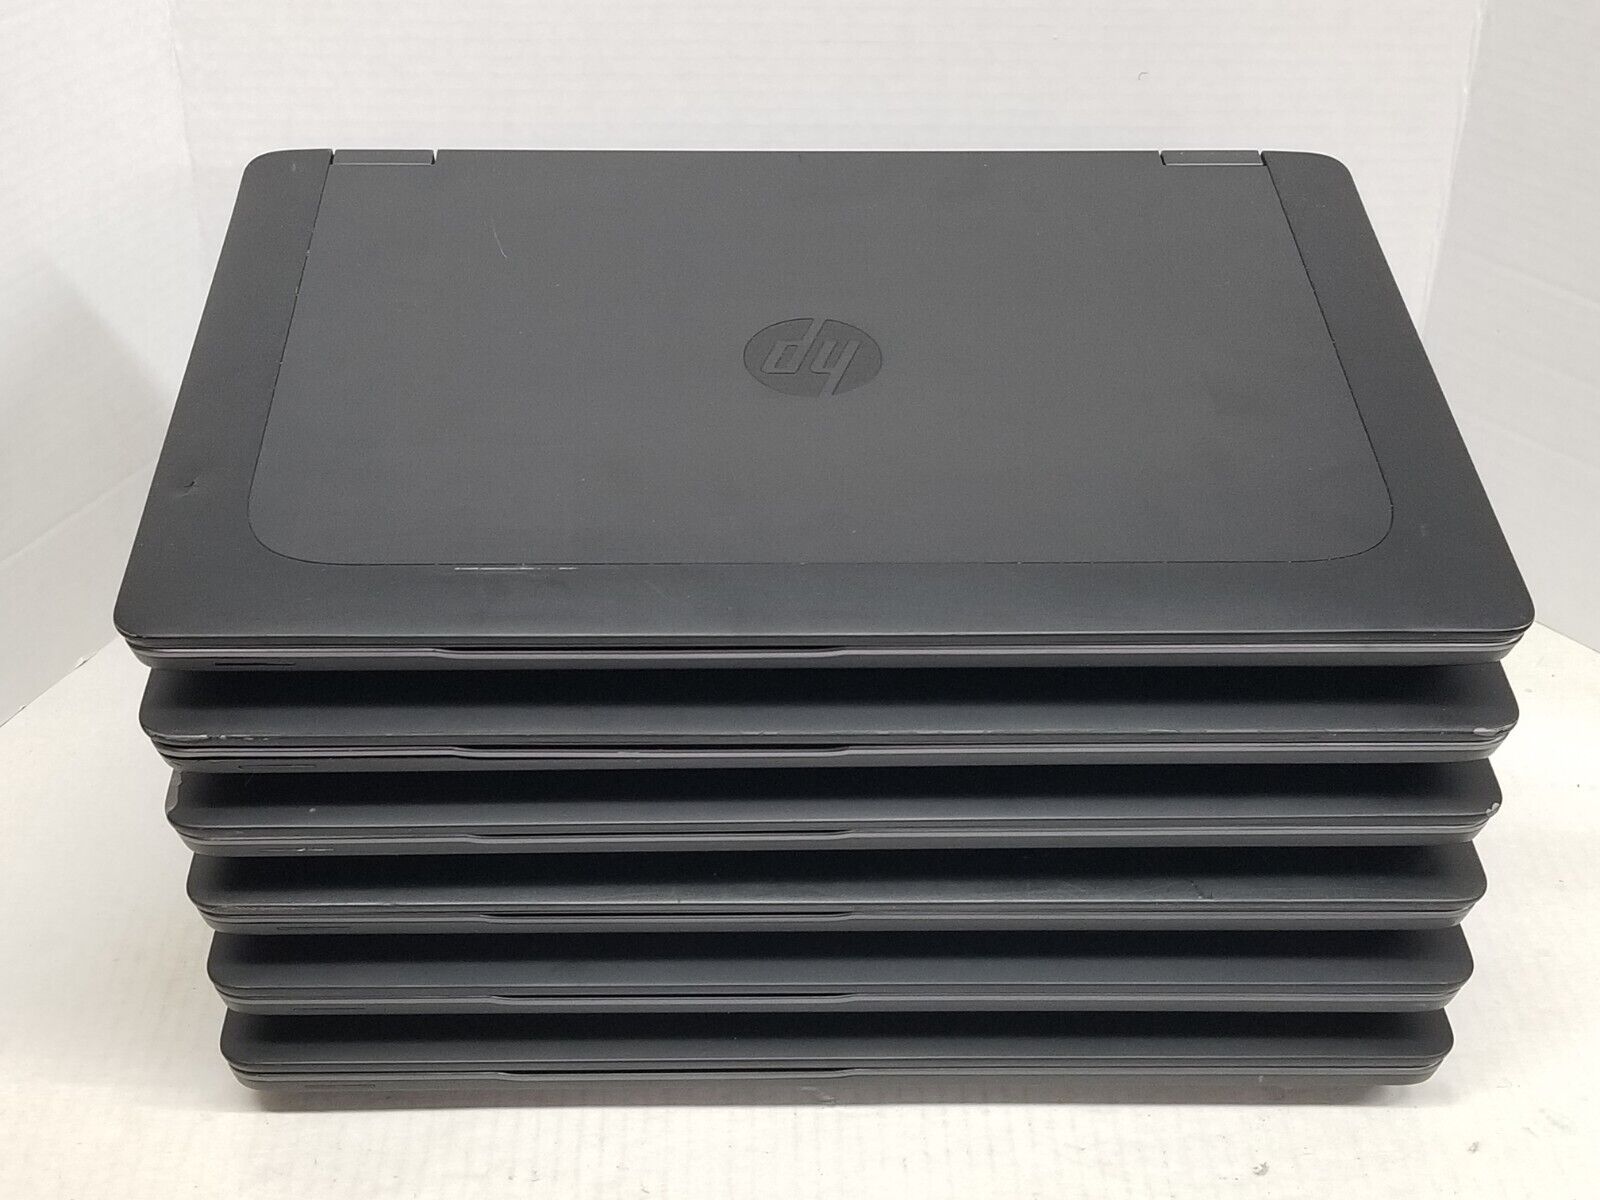 Lot of 6 HP Zbook 15 G2 G1 Laptops - i7 Mixed Specs - No AC